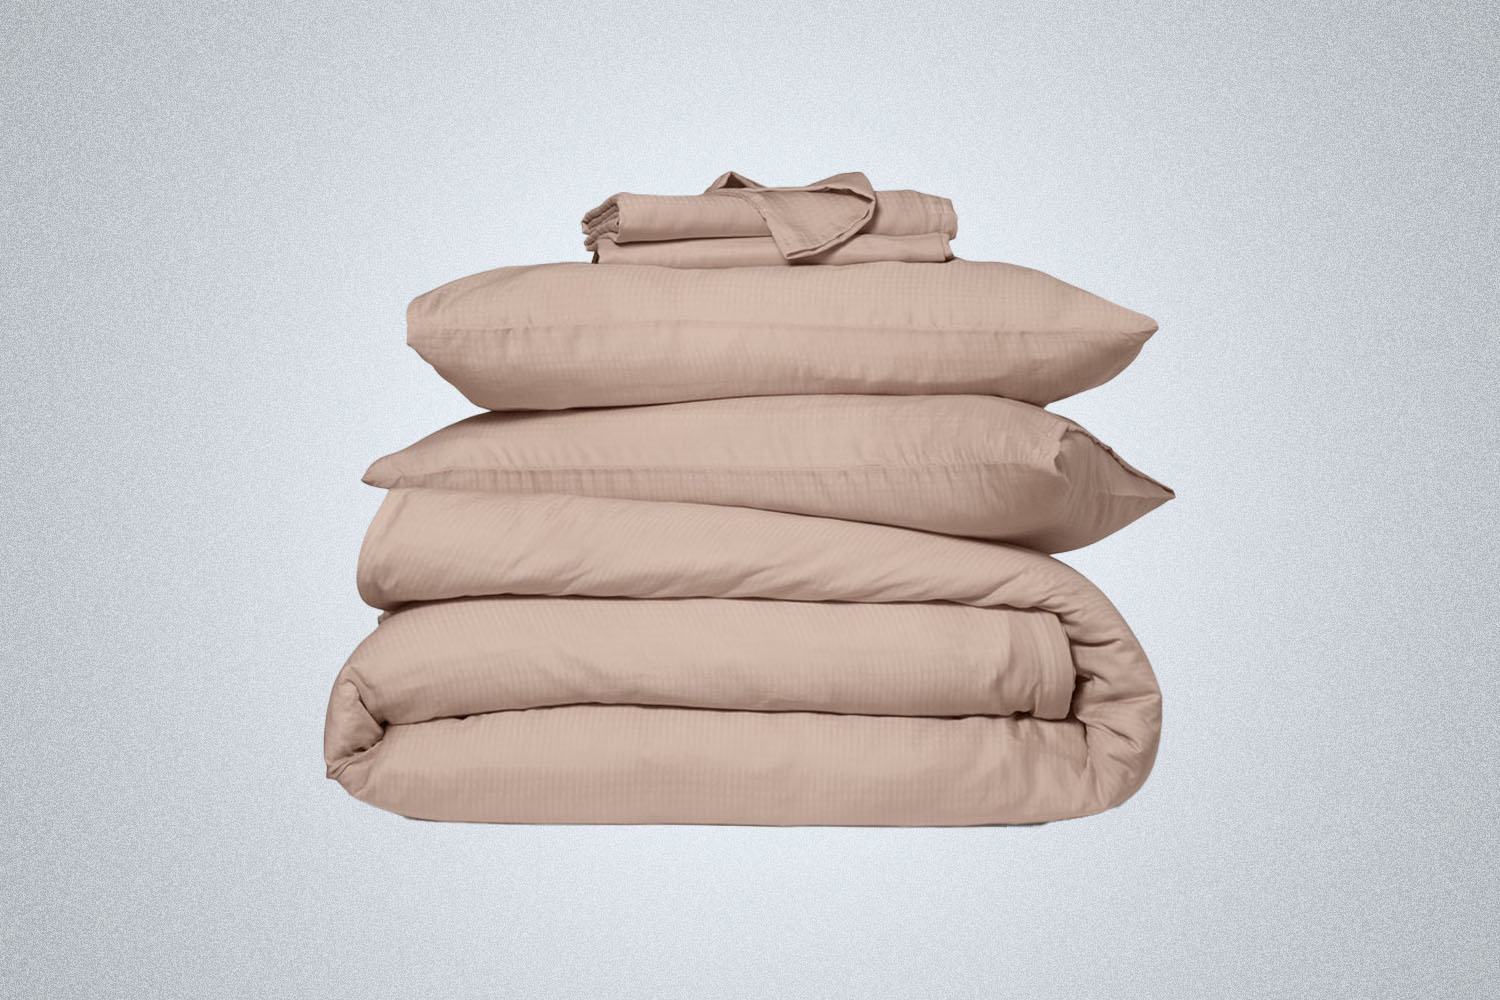 Casper Hyperlite Sheets are soft, comfortable sheets for restful sleep in 2022